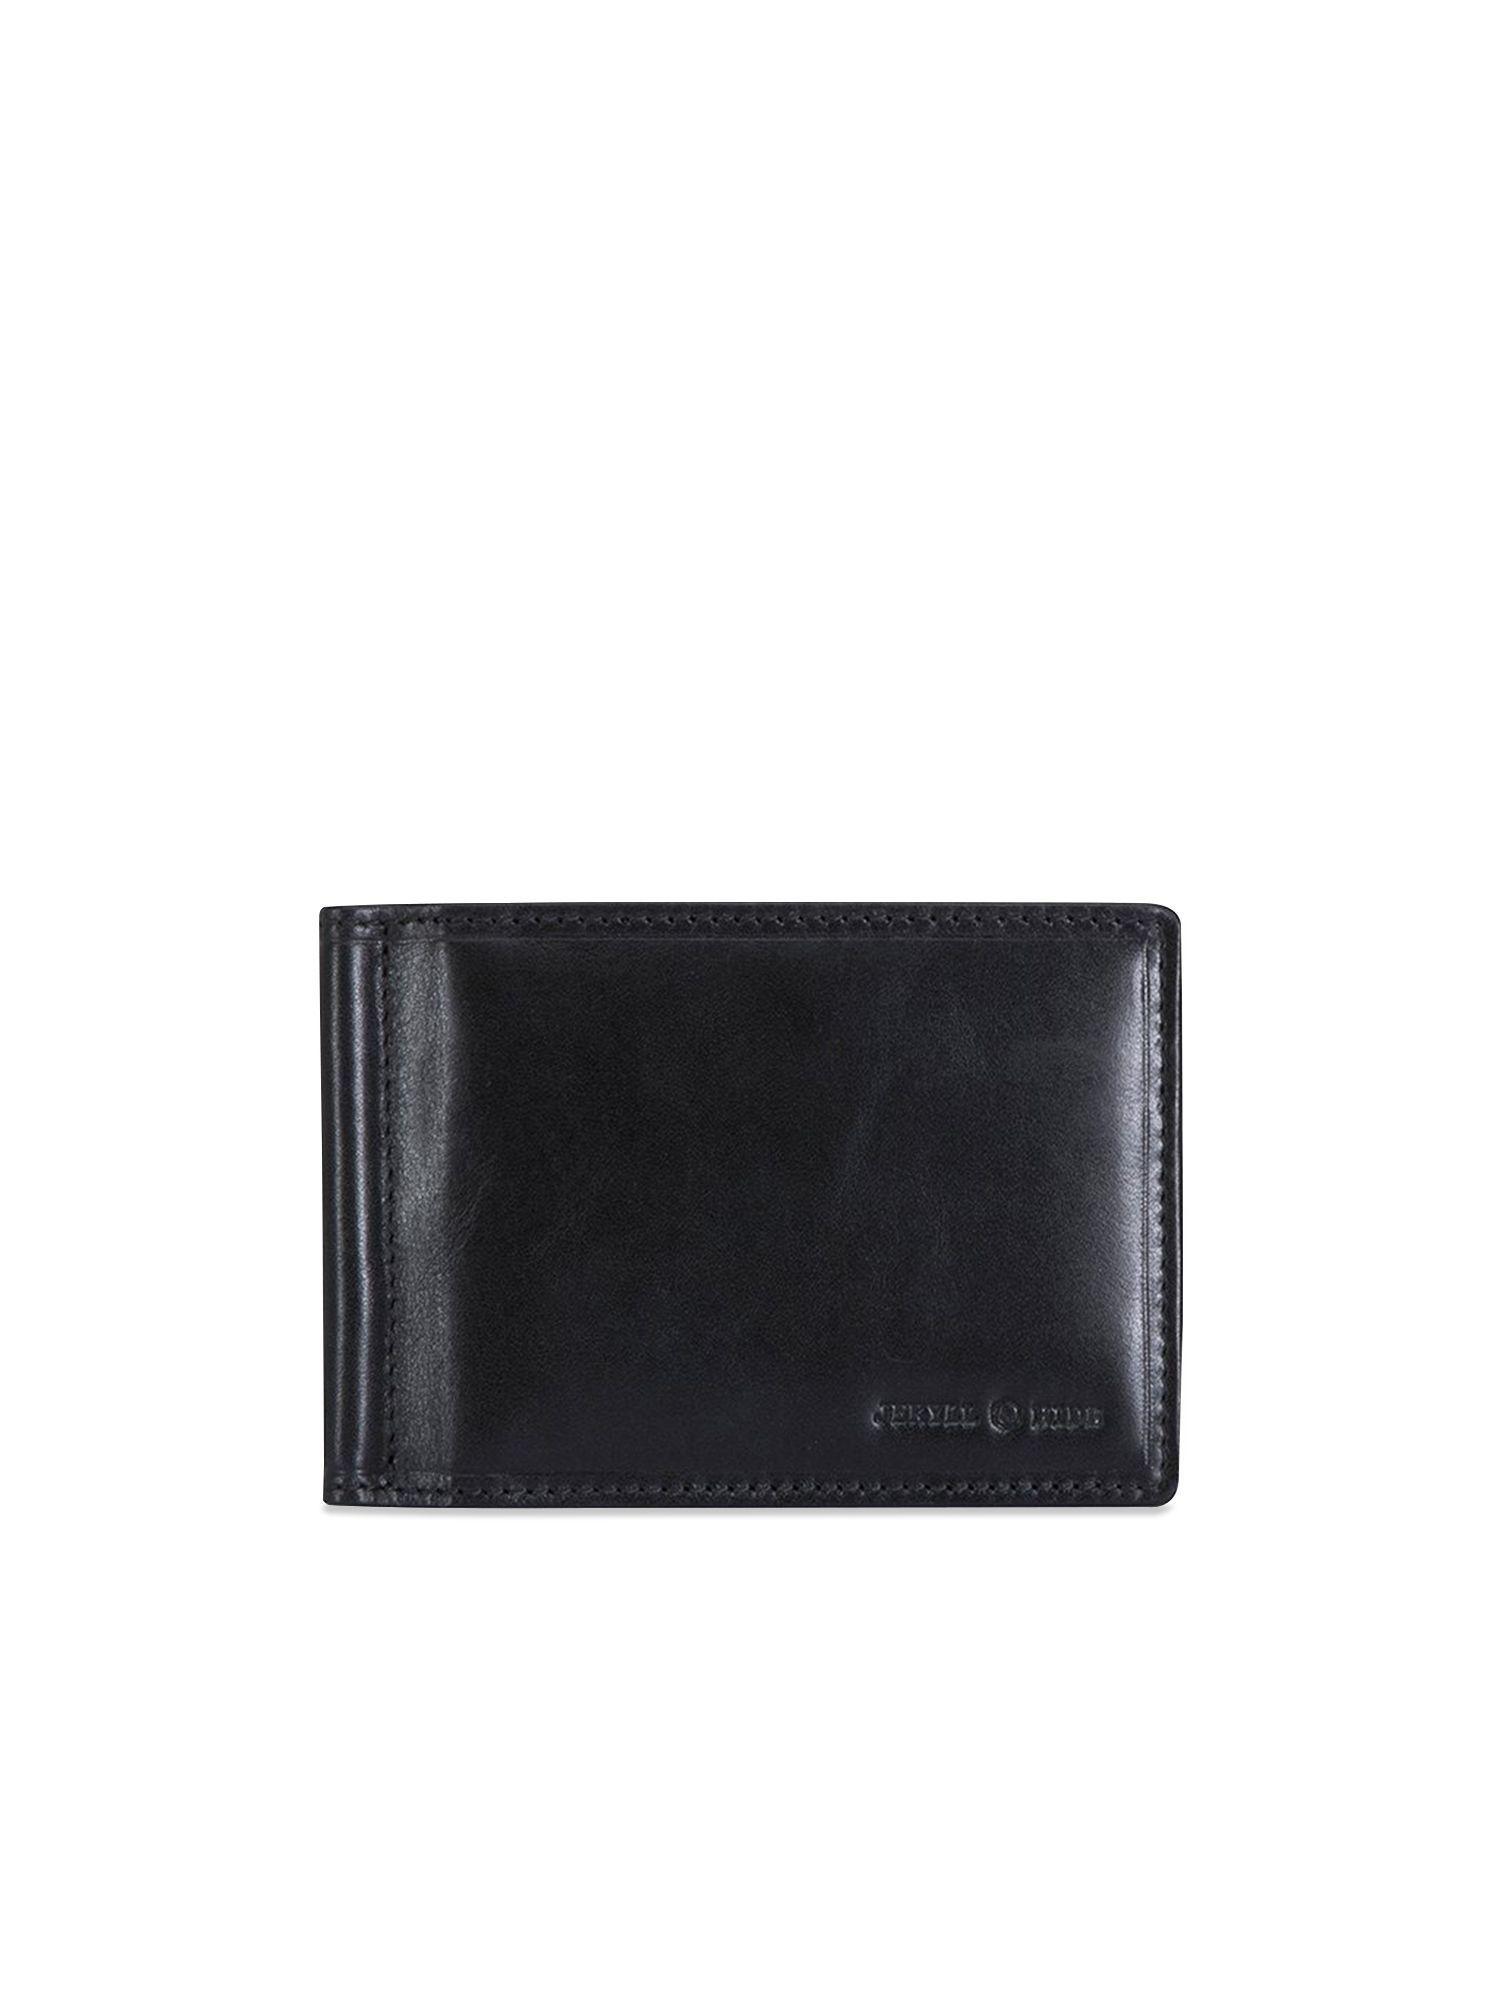 2792oxbl oxford leather money clip wallet - black